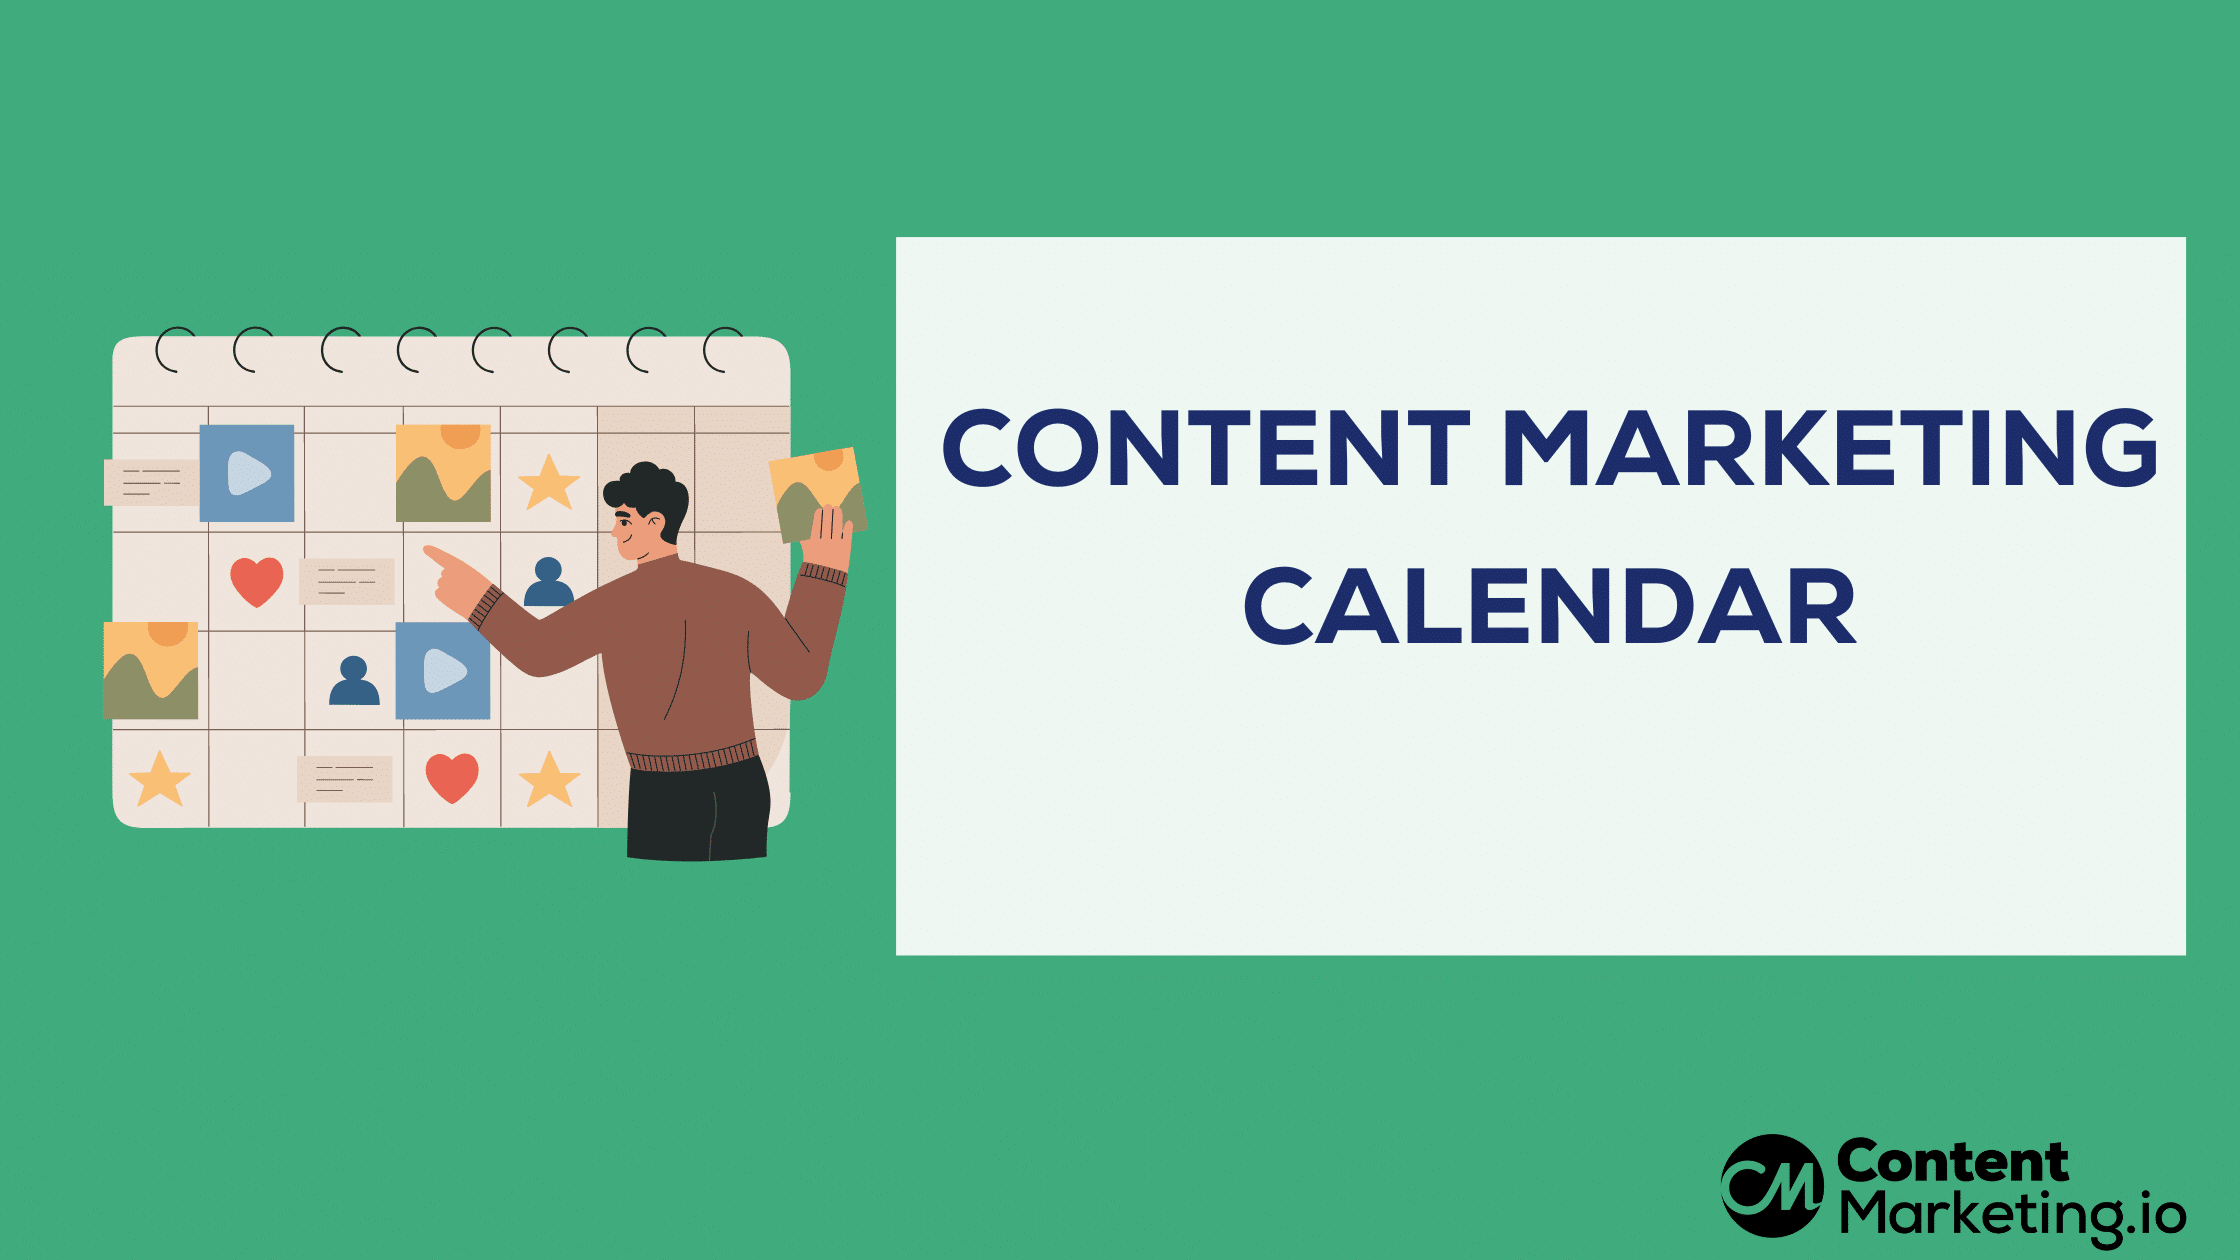 Content Marketing Calendar